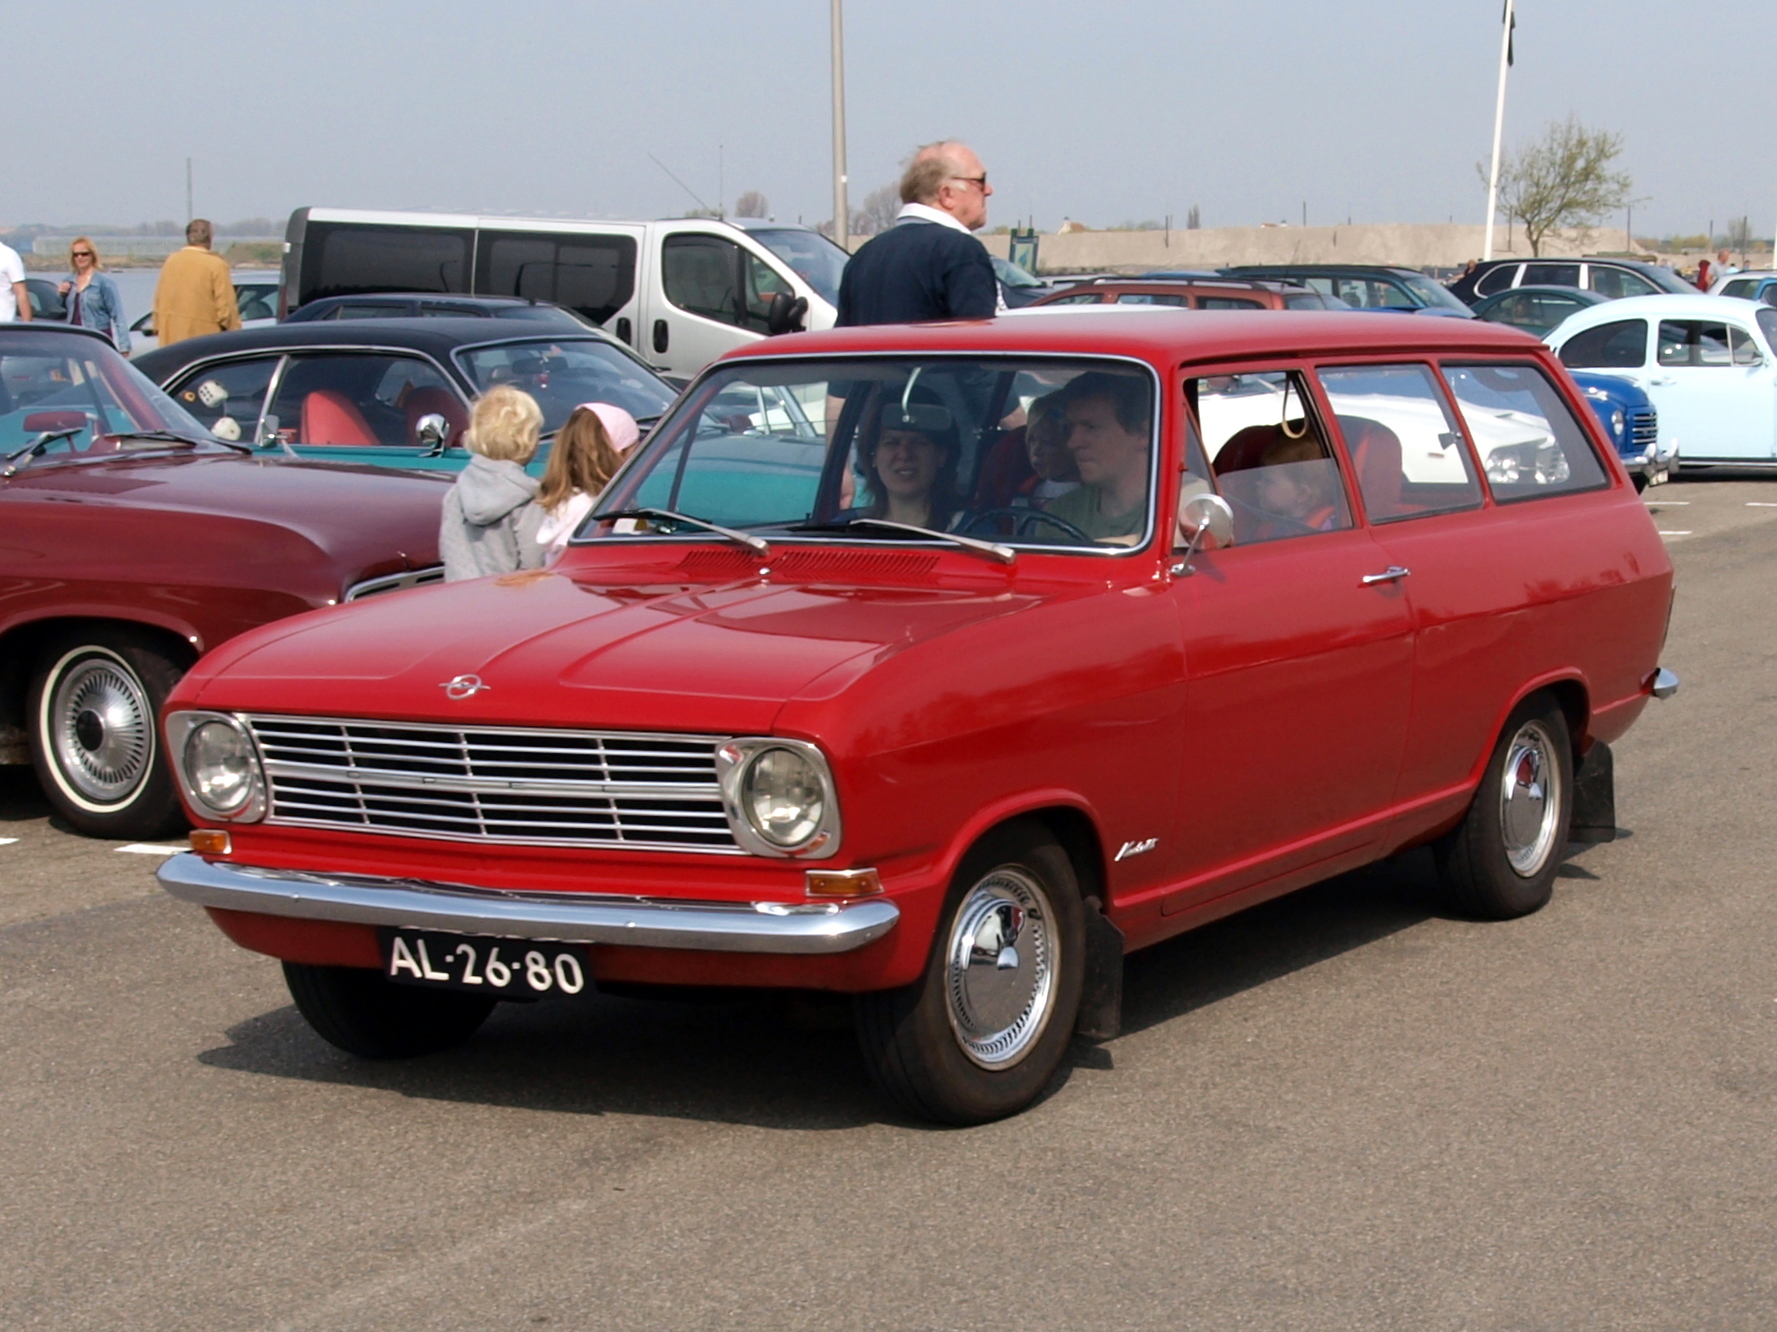 File:Opel Kadett Caravan (1967), Dutch licence registration AL-26-